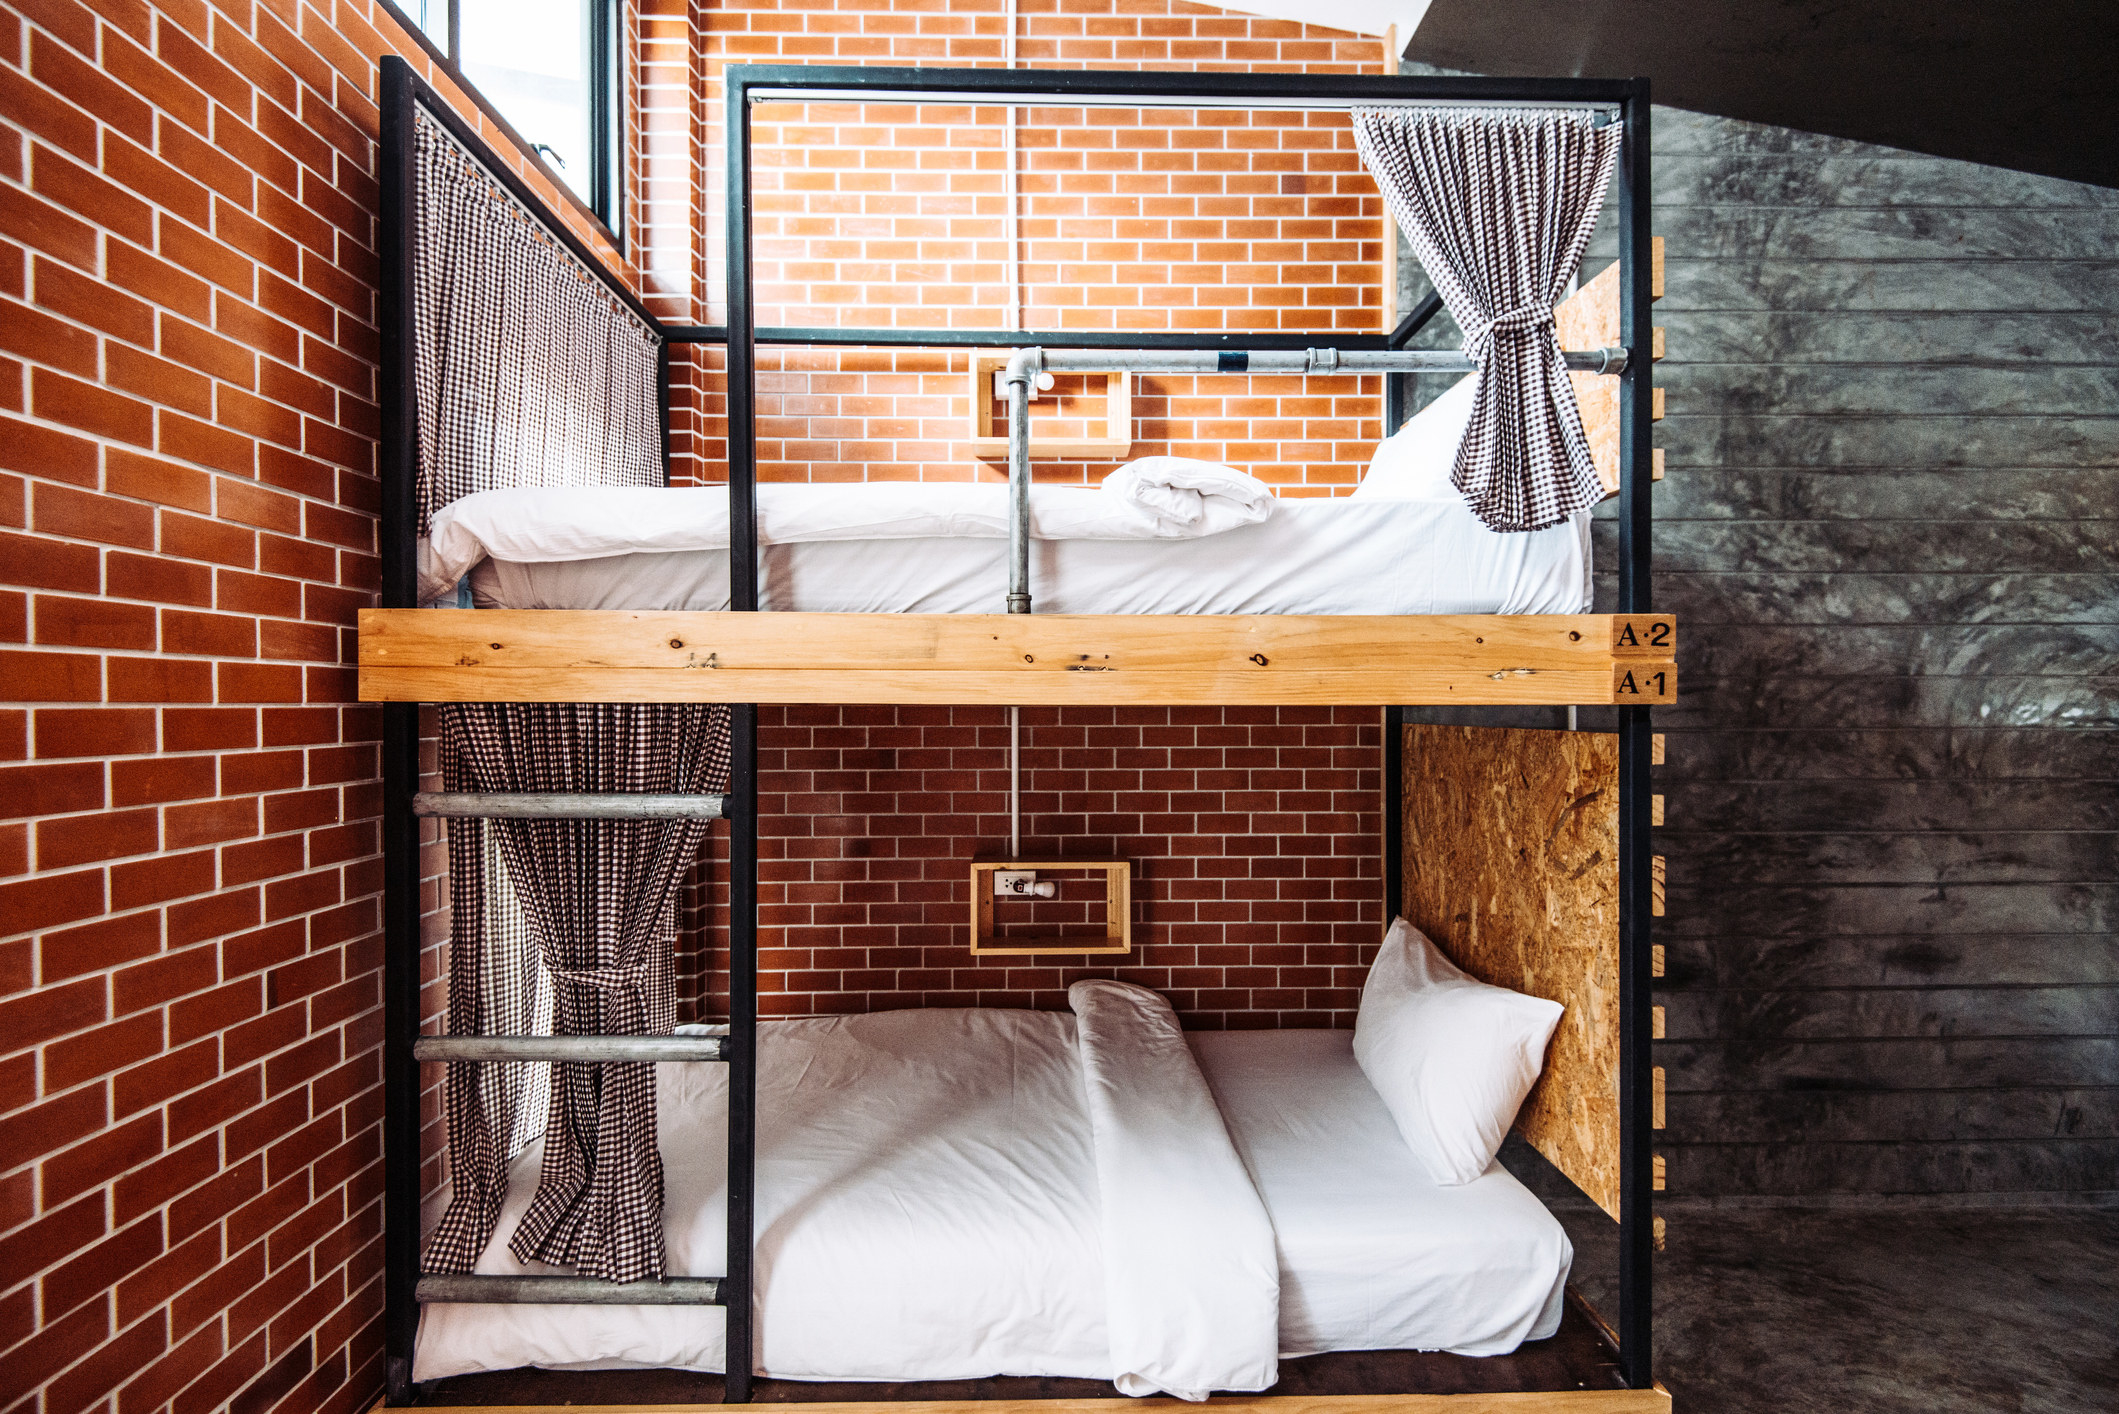 A hostel bunk bed.